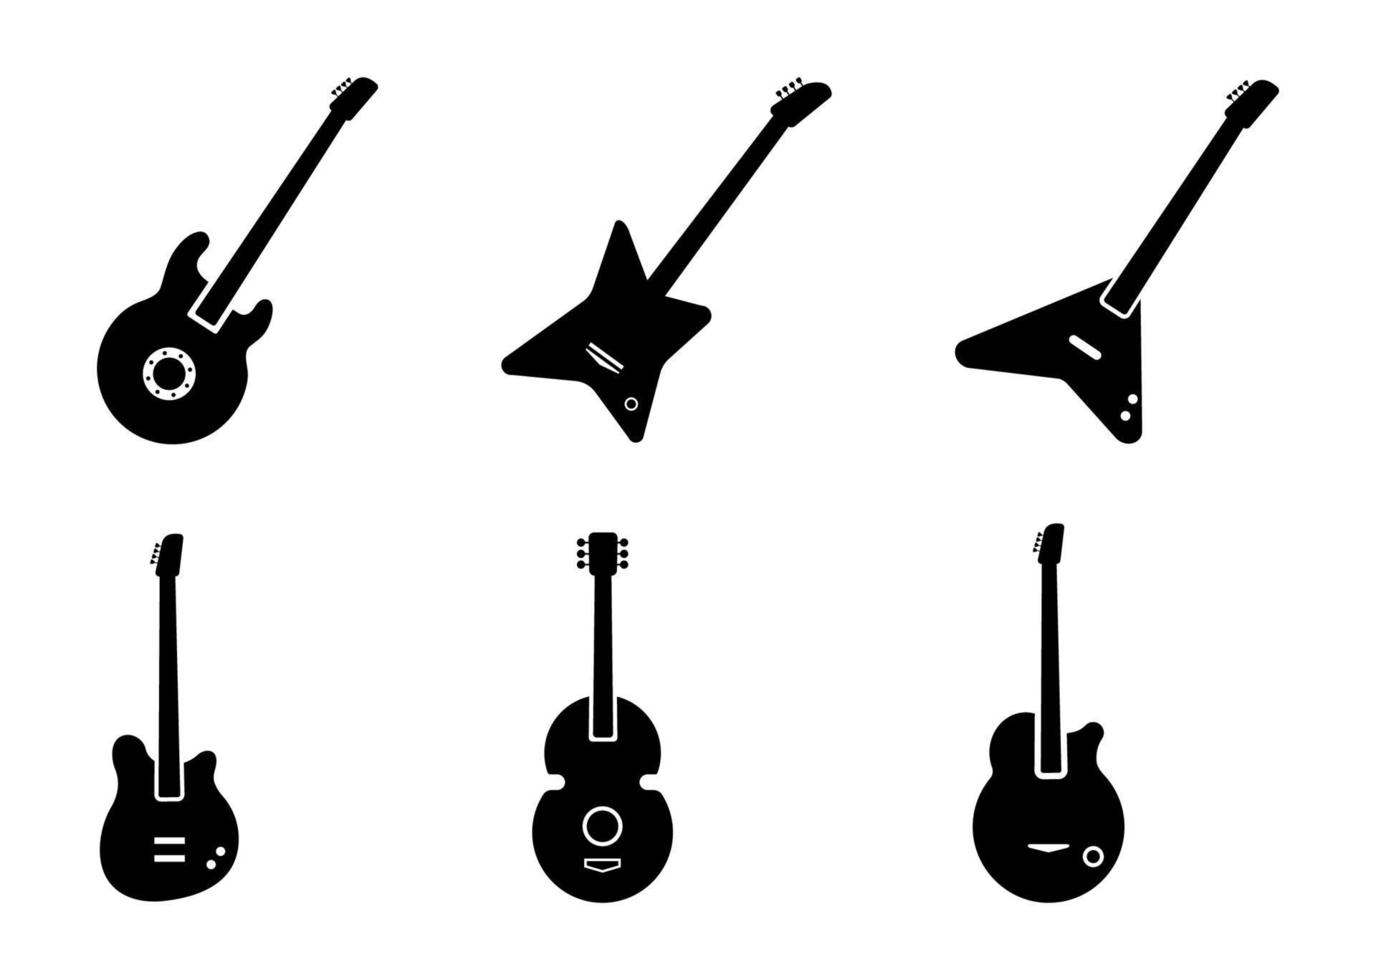 guitar icon set - vector illustration .